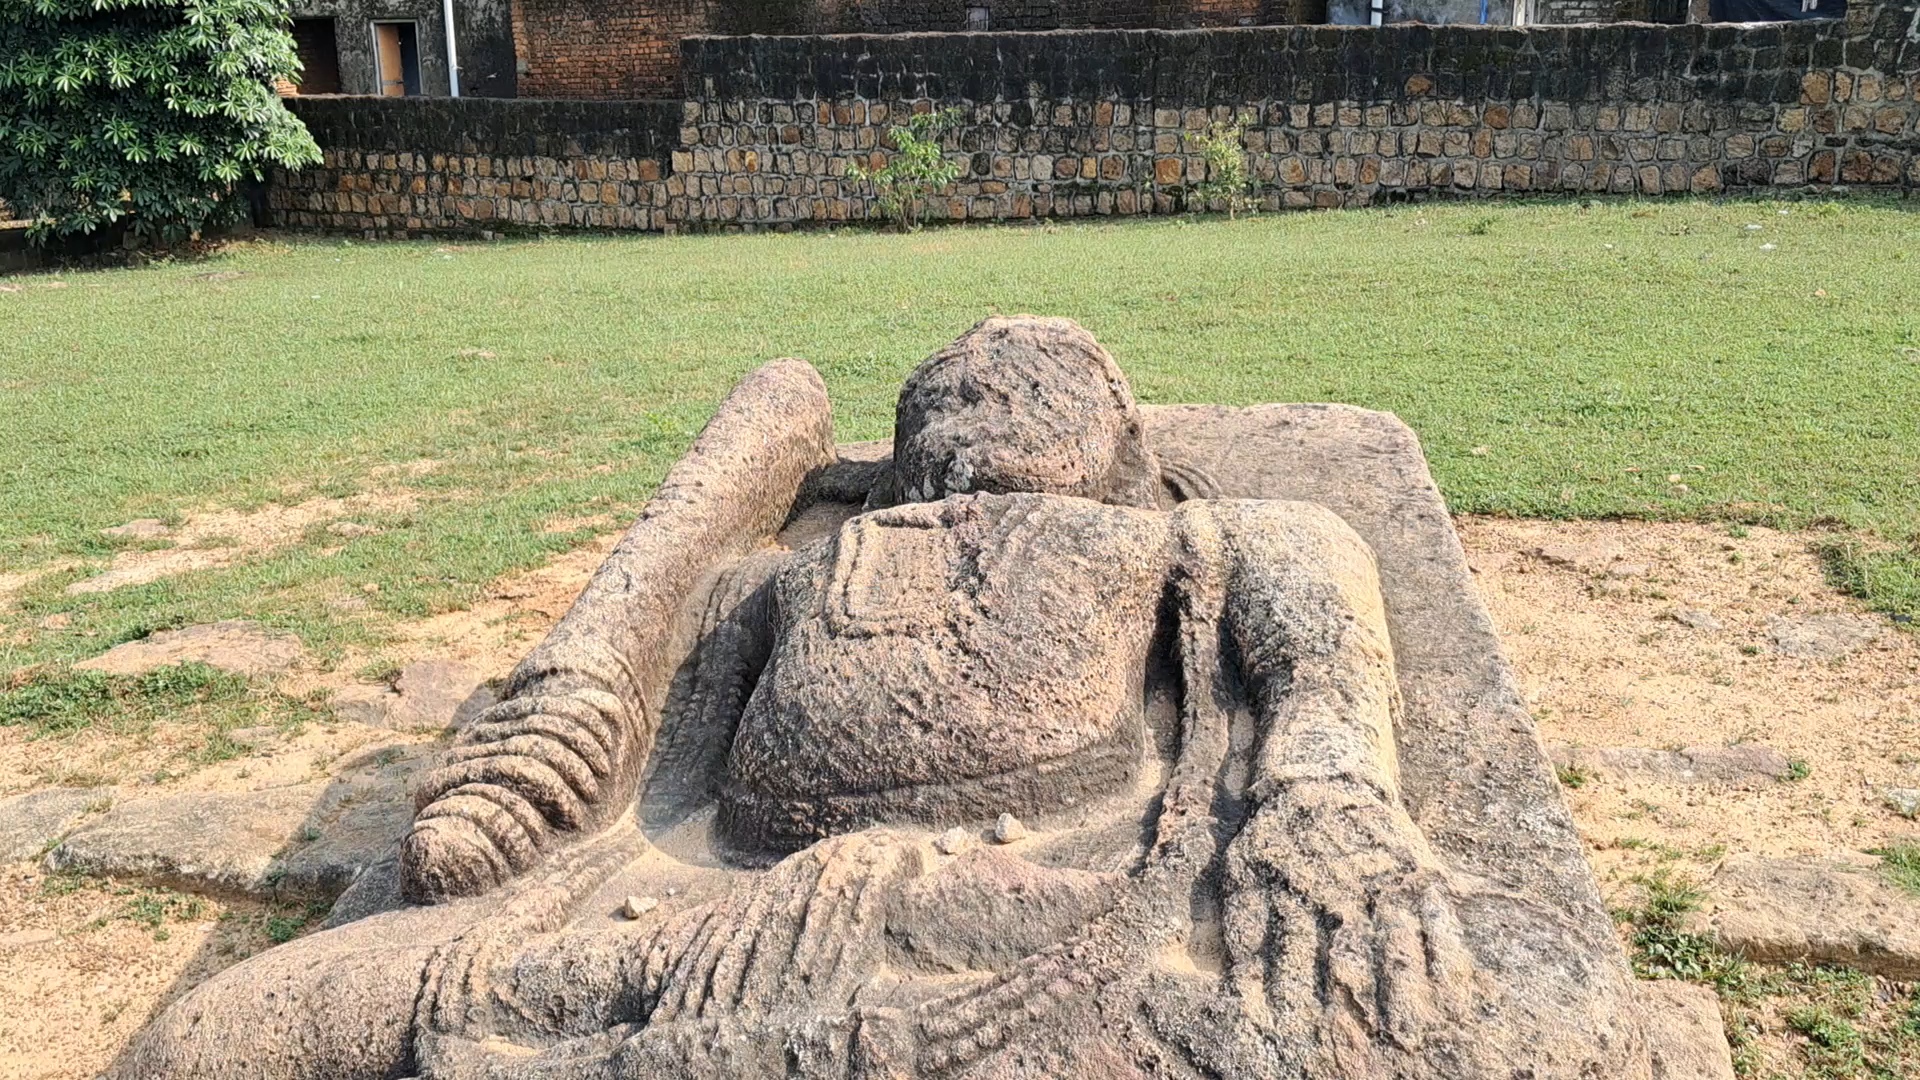 The largest idol of Goddess Durga